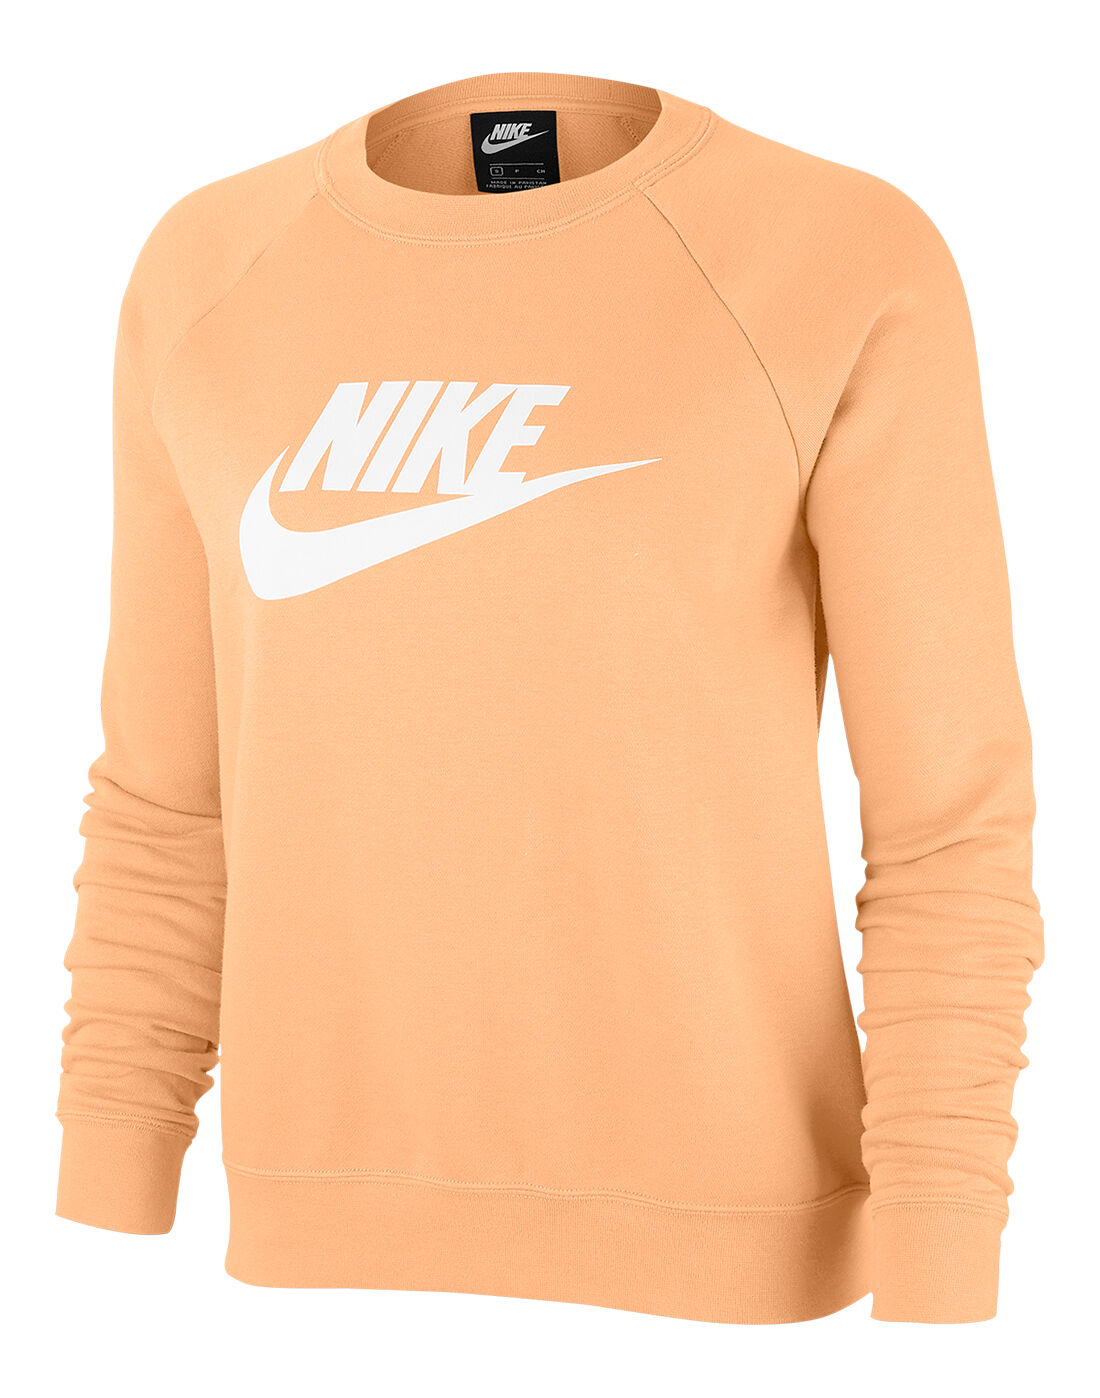 Nike Womens Essential Crew Sweatshirt 